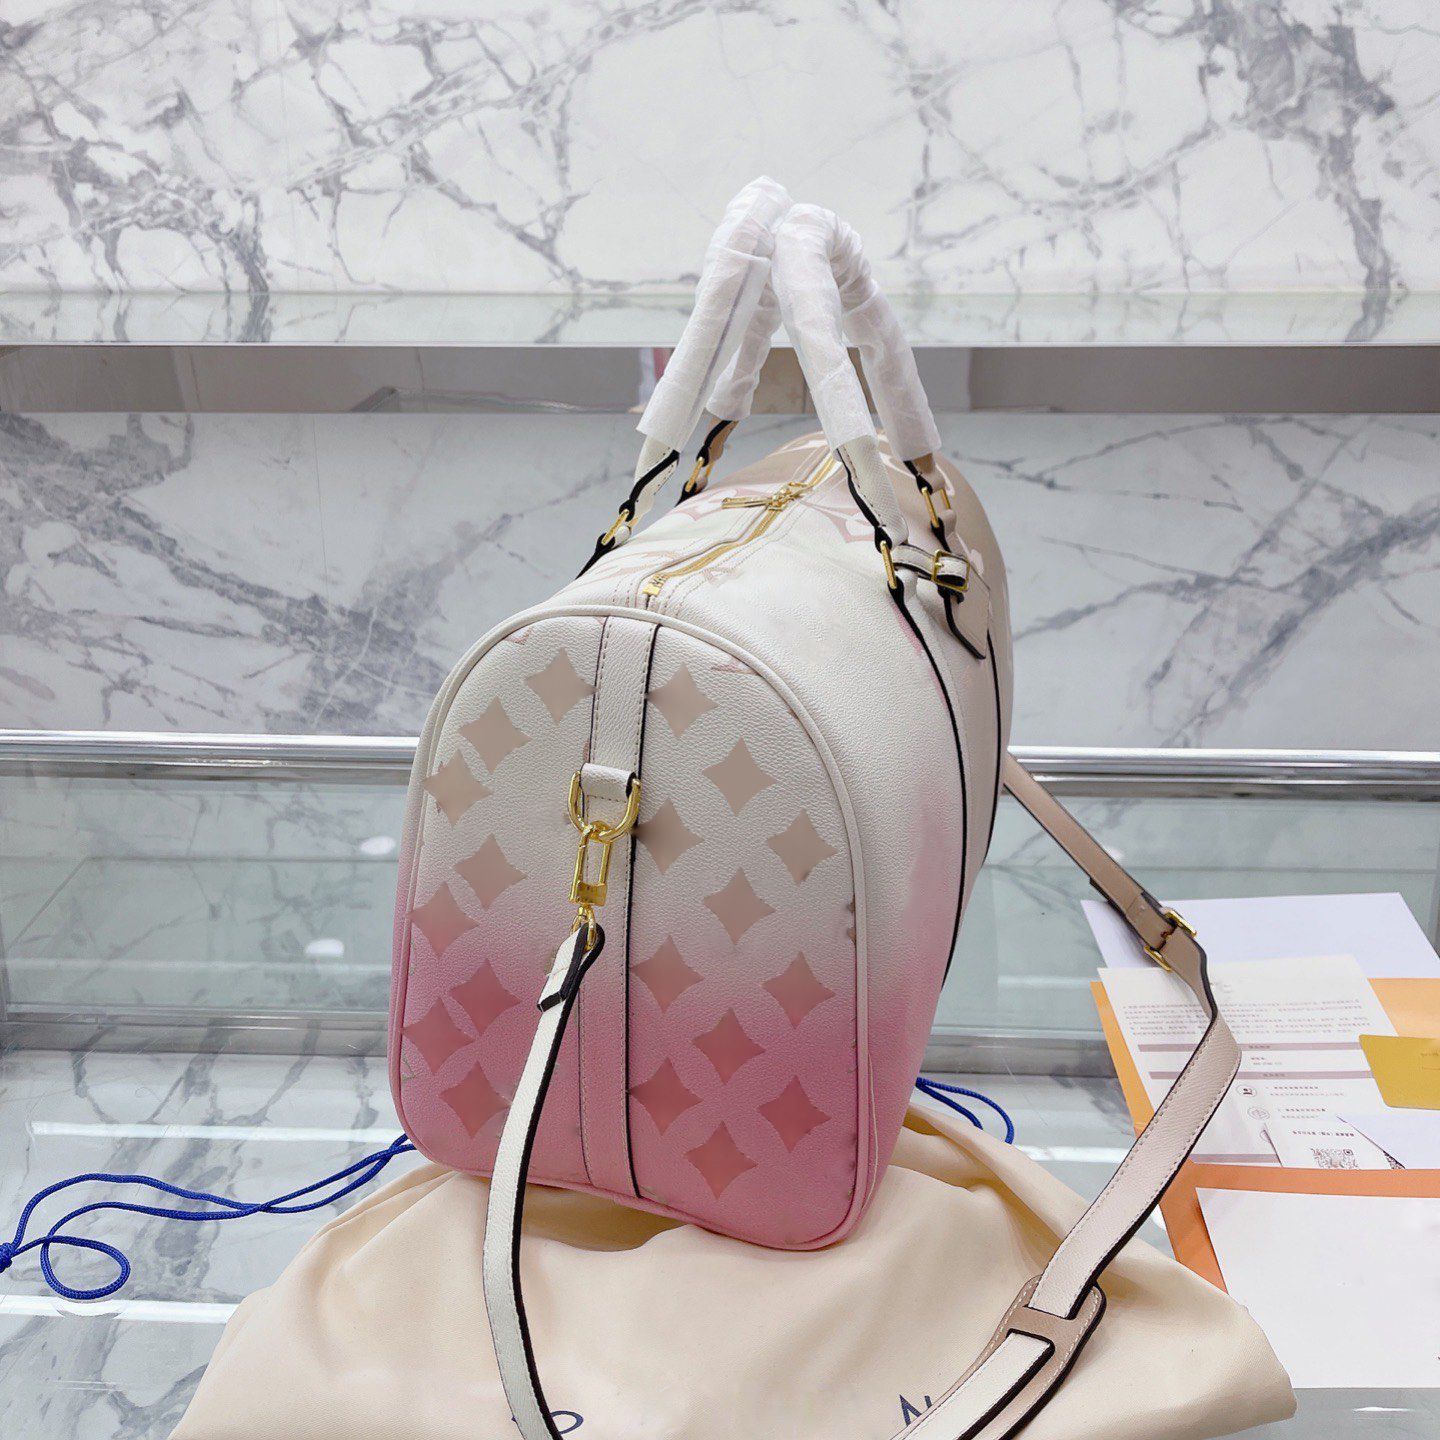 Bag Religion on X: A pastel daydream 🌈 Shop the Louis Vuitton